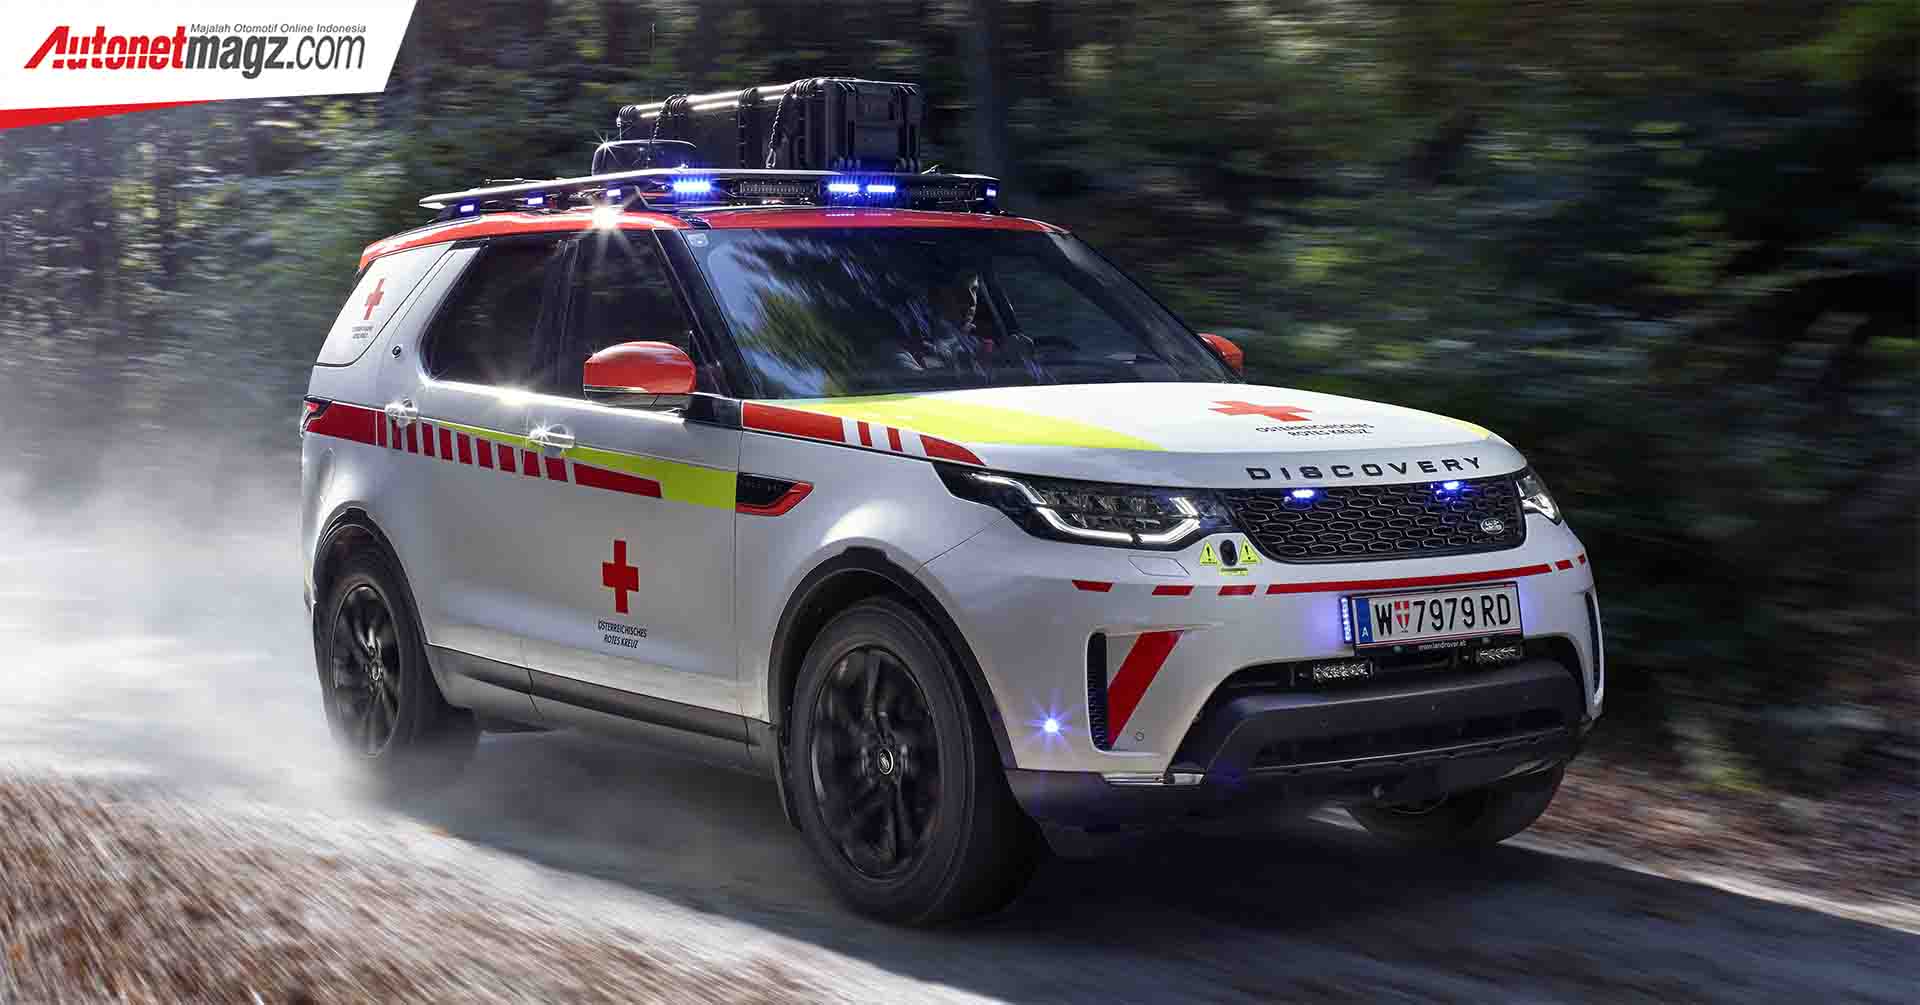 Berita, Land Rover Red Cross Discovery depan: Land Rover Memperkenalkan Discovery Edisi Khusus Palang Merah